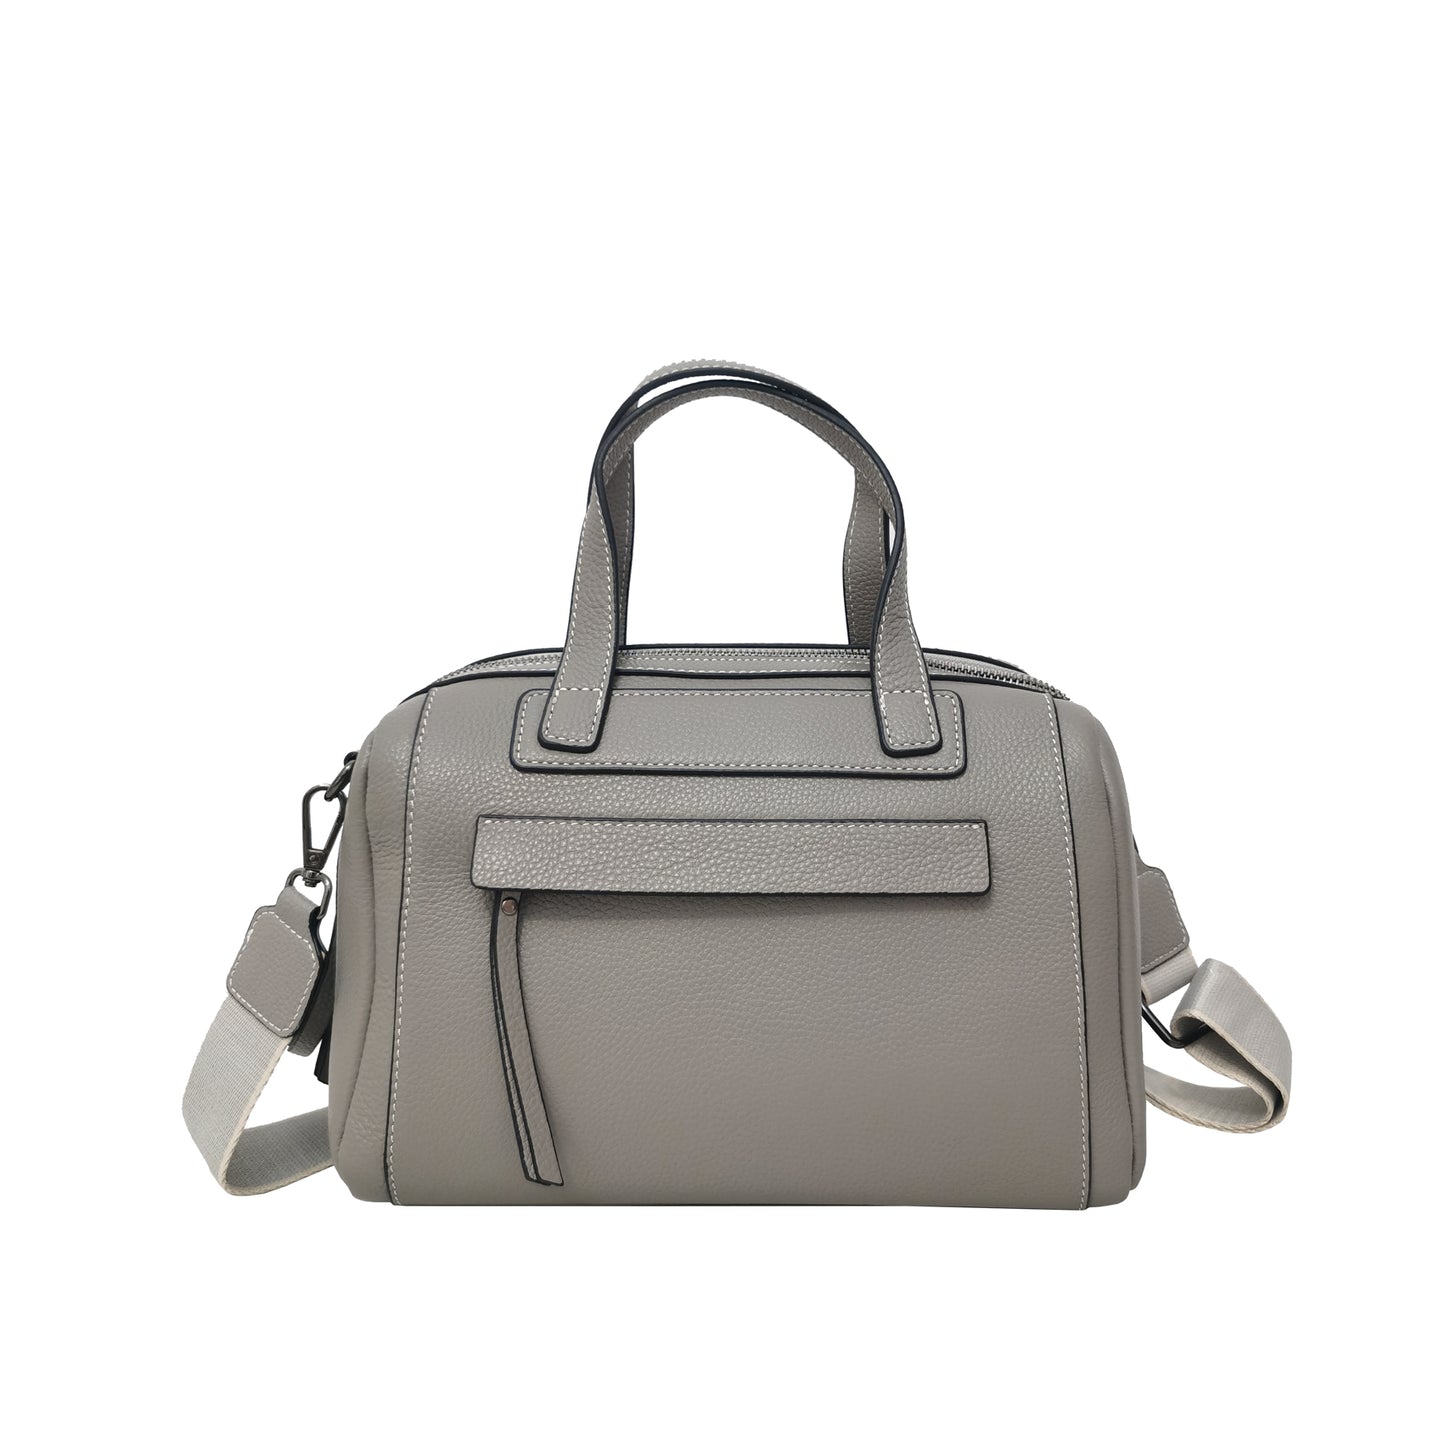 Women's genuine cowhide leather handbag Box V2 design with 2 straps